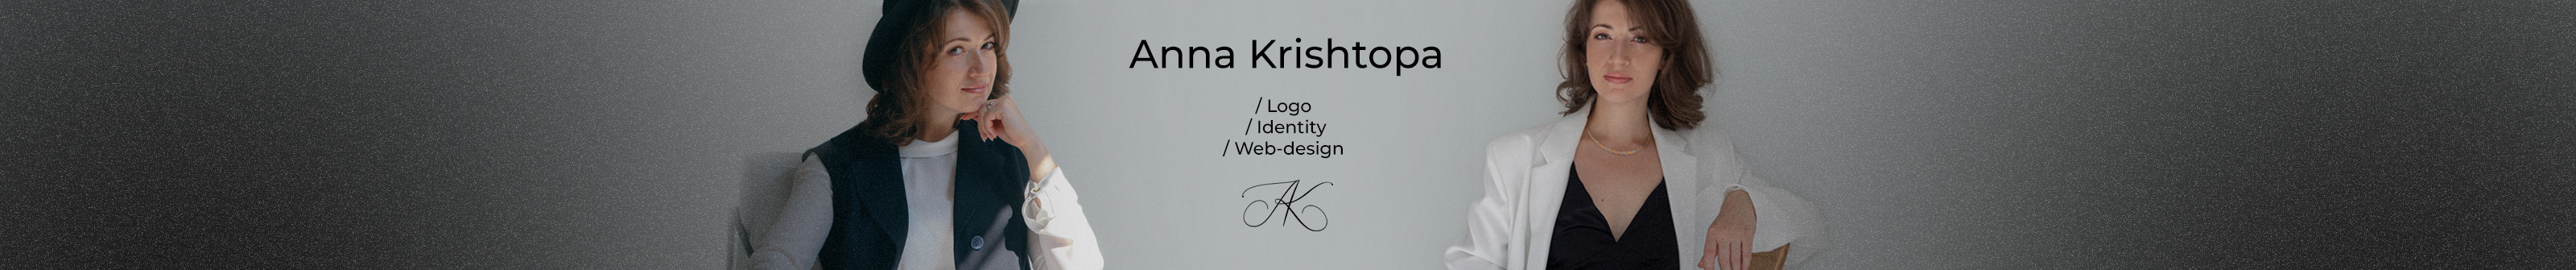 Banner de perfil de Anna Krishtopa